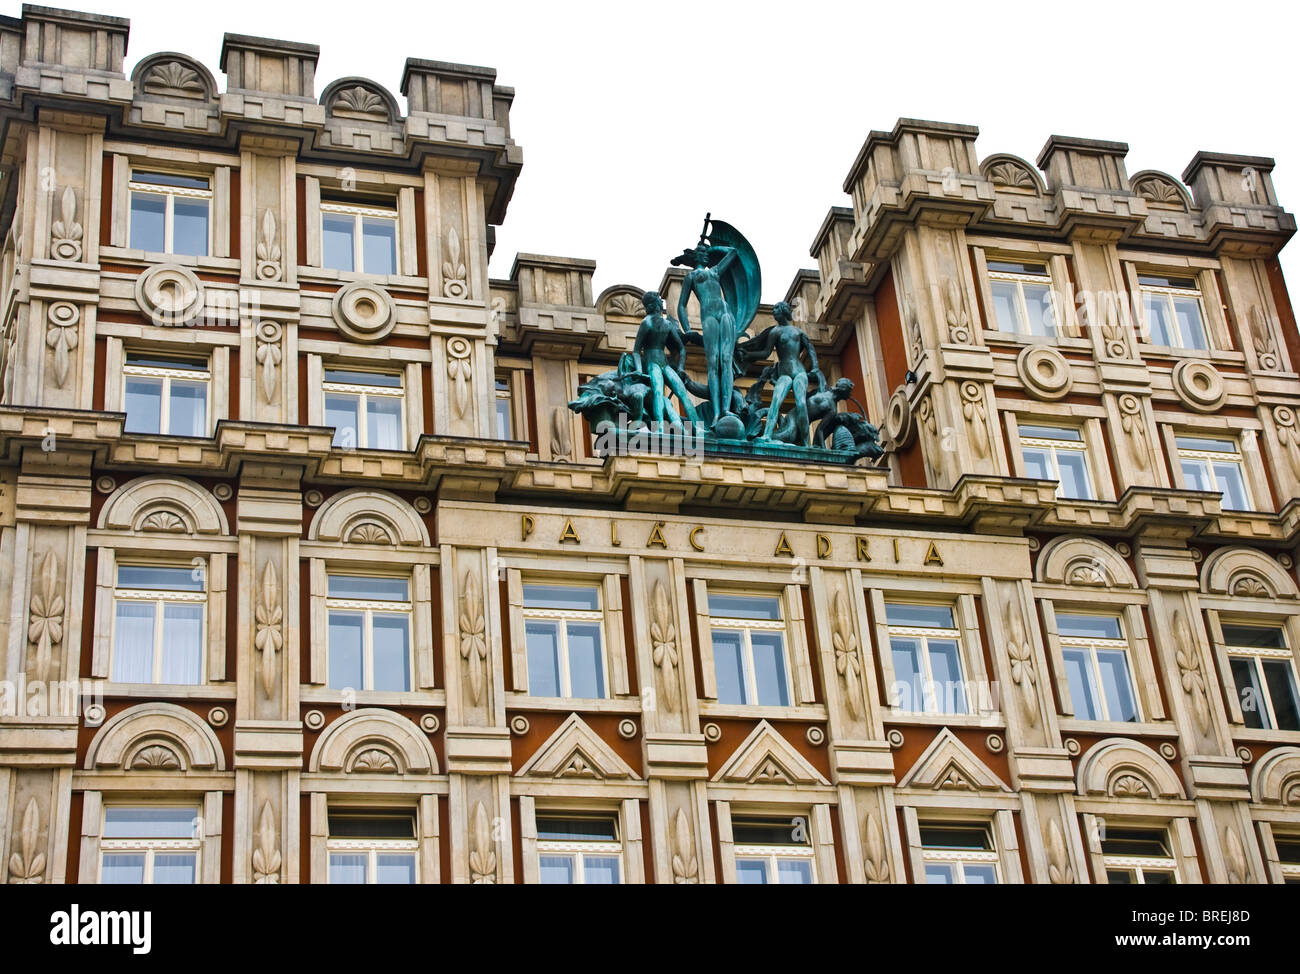 Cubist architecture and Sculpture Adria Palace building Prague Czech Republic eastern Europe Stock Photo